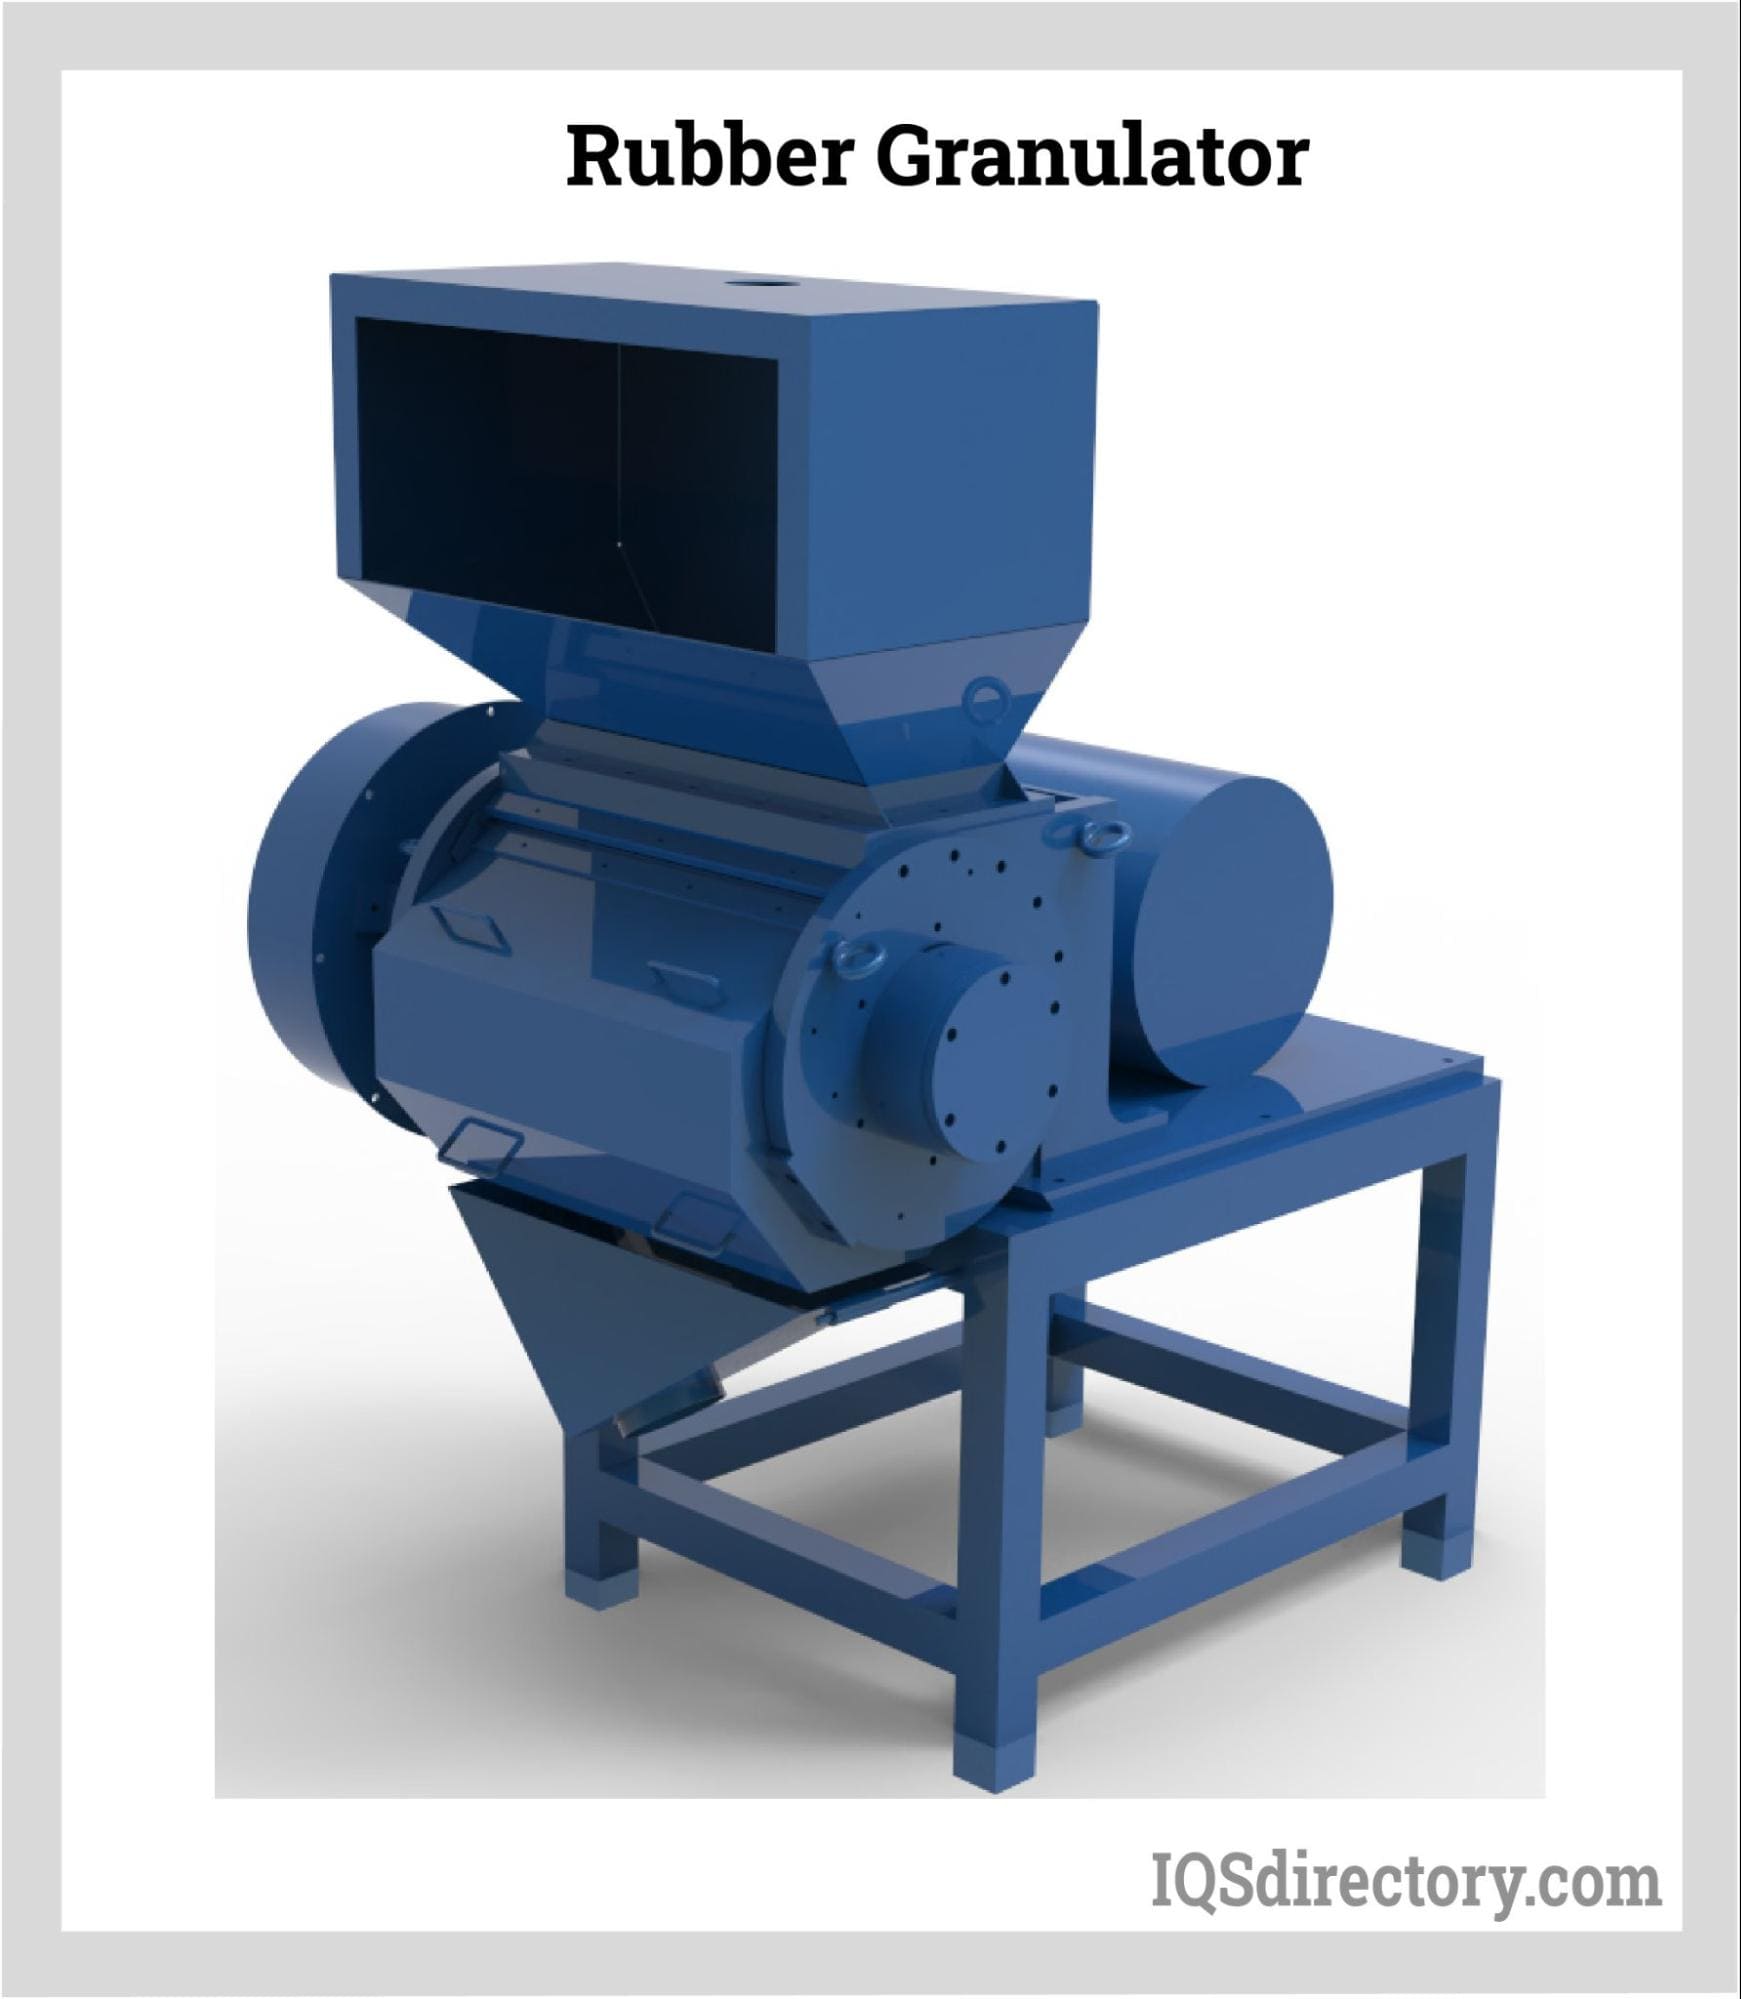 Rubber Granulator